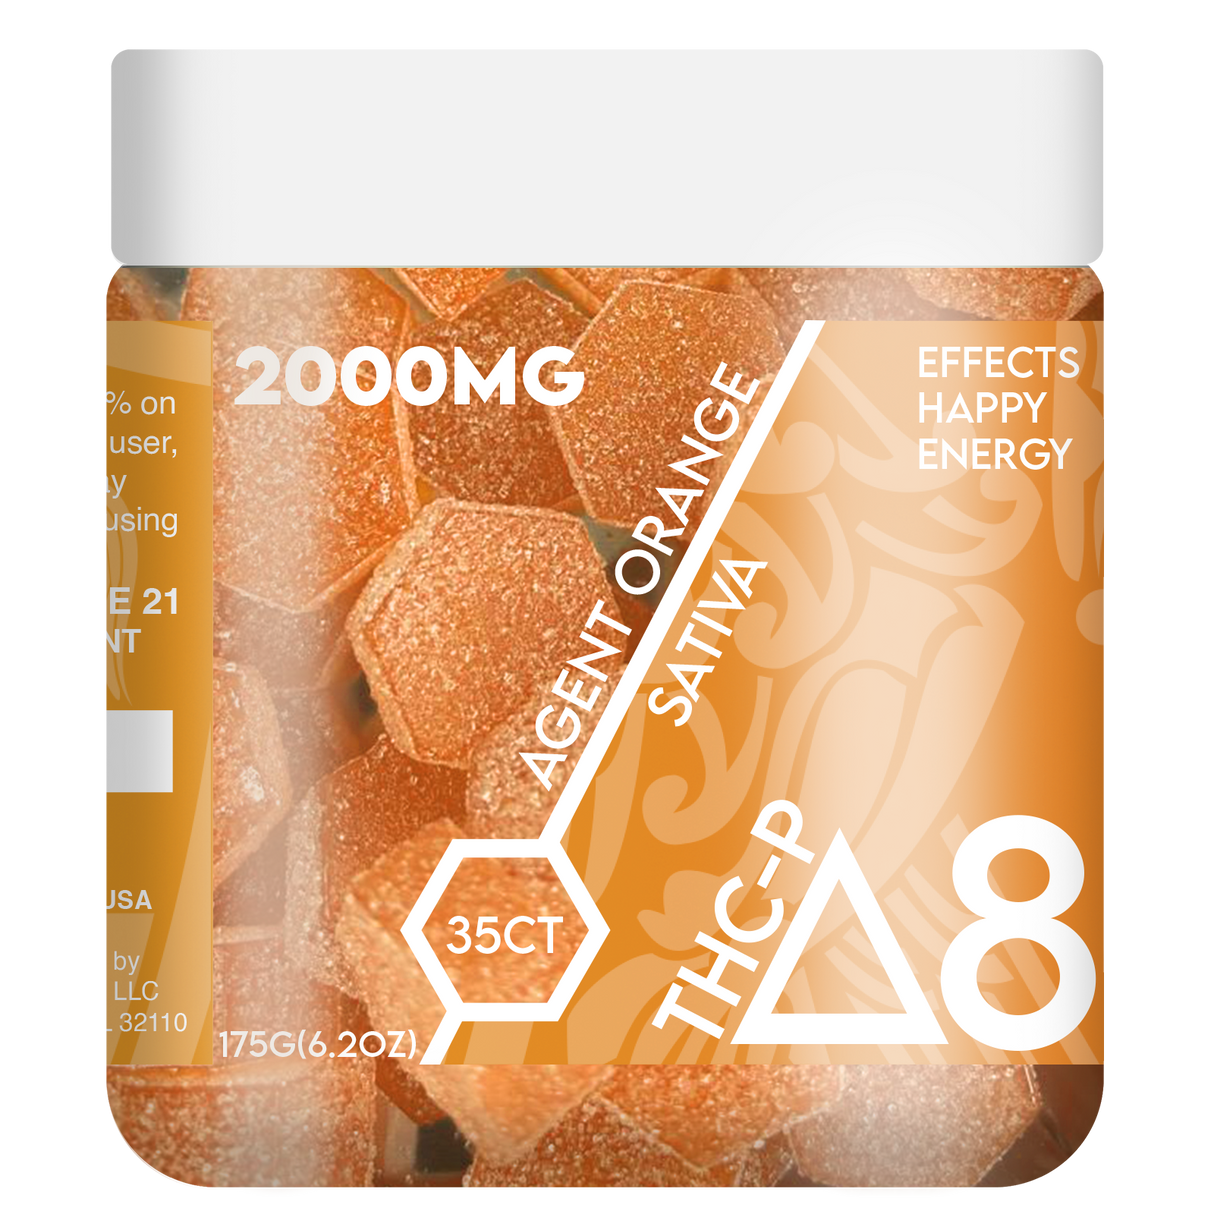 RA Royal 2000MG 35CT Delta 8 + THC-P Gummy Jar: Agent Orange (Sativa)